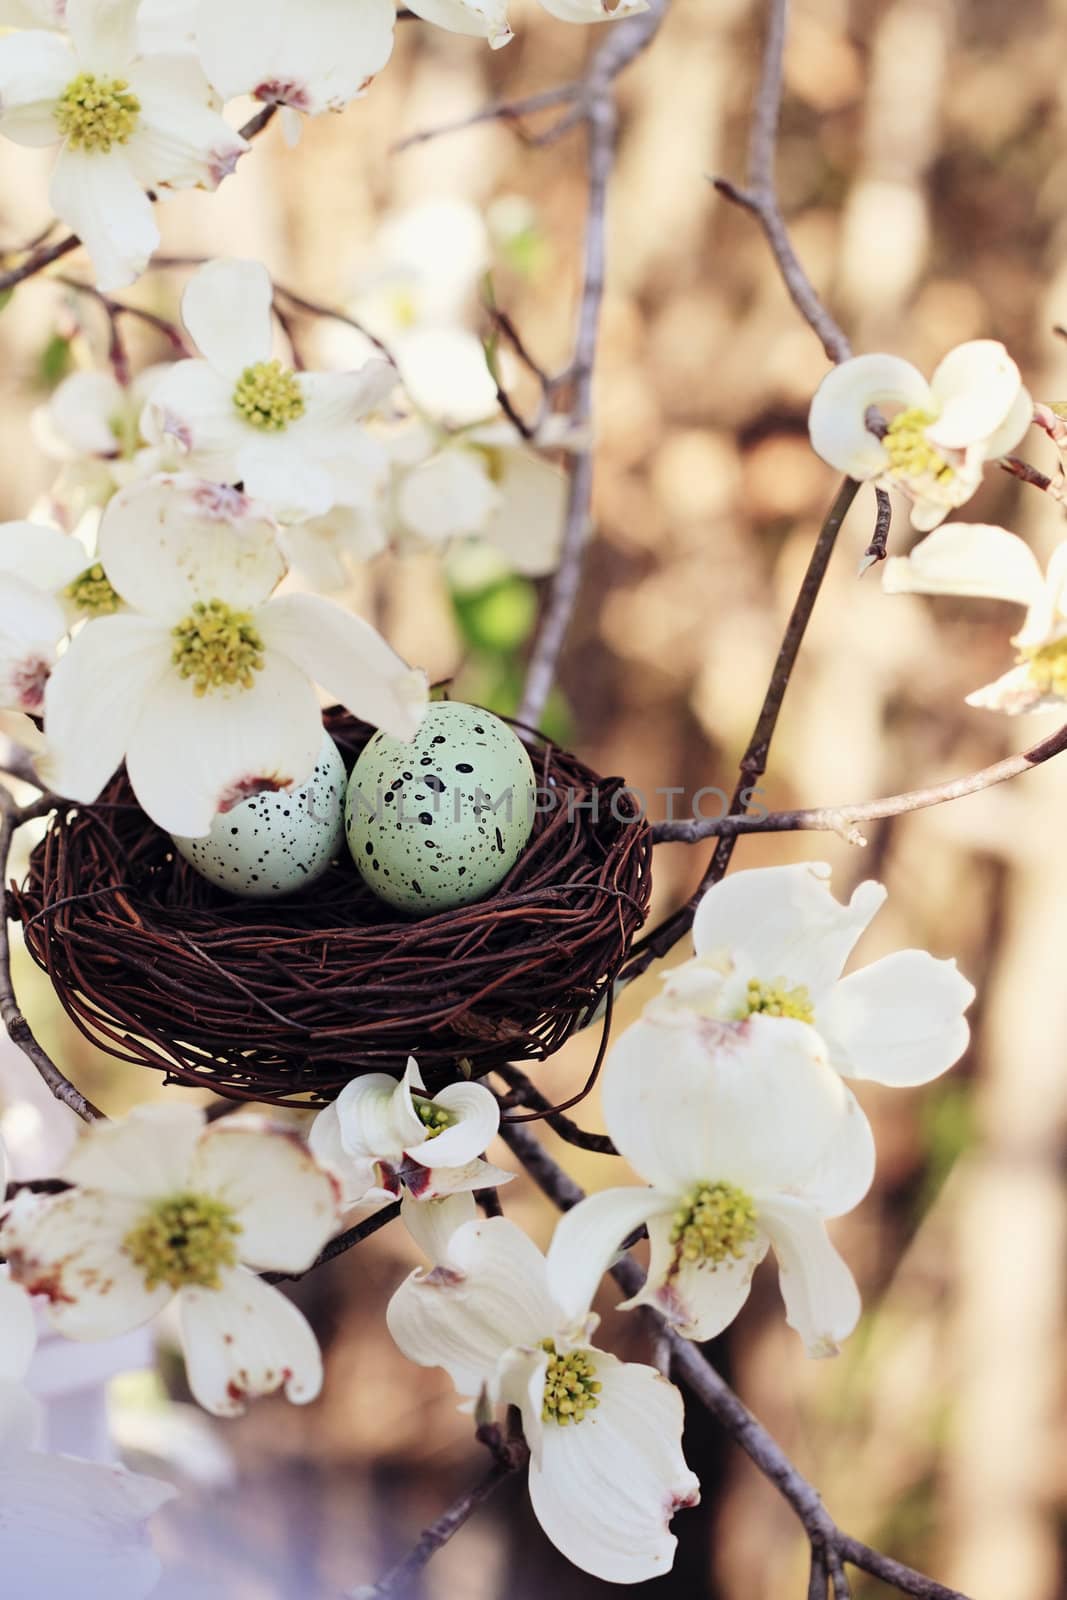 Springtime Eggs and Nest by StephanieFrey